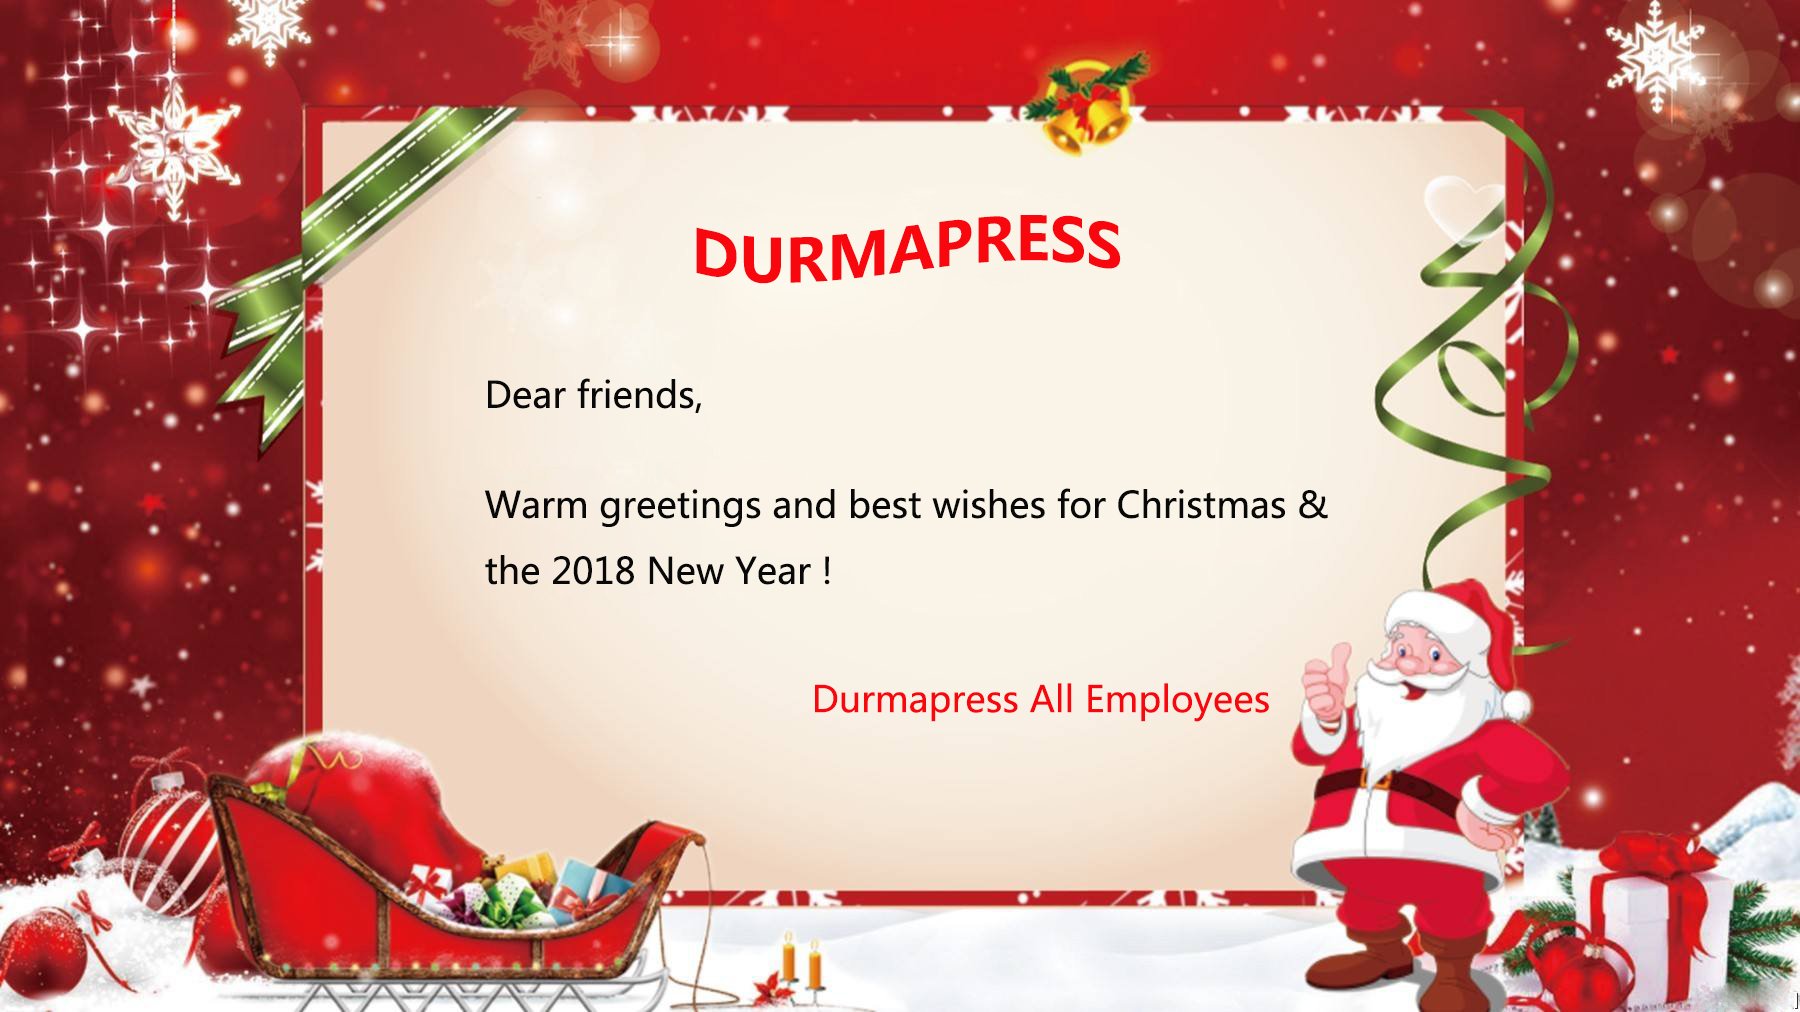 Durmapress Wishing you a blissful Xmas and New Year 